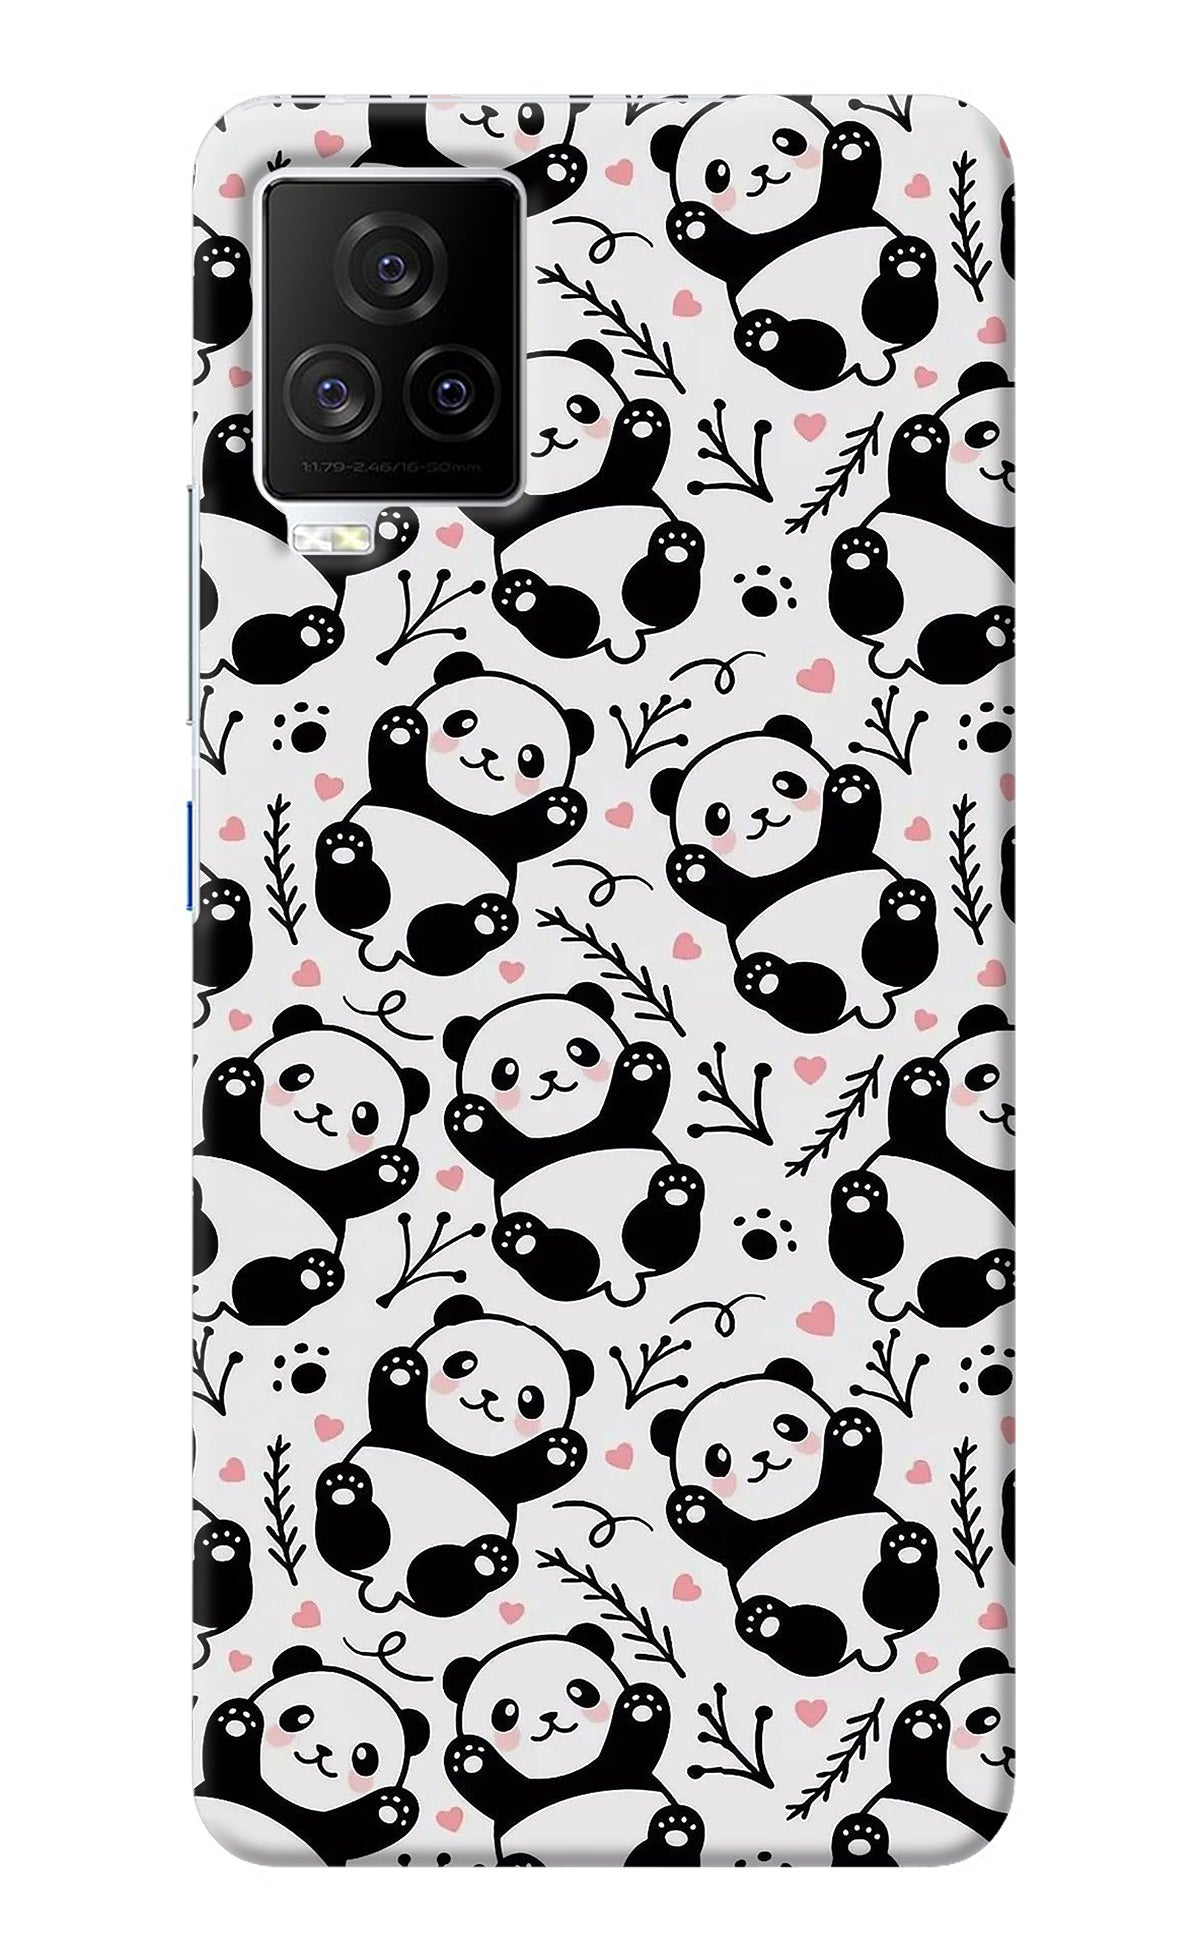 Cute Panda iQOO 7 Legend 5G Back Cover